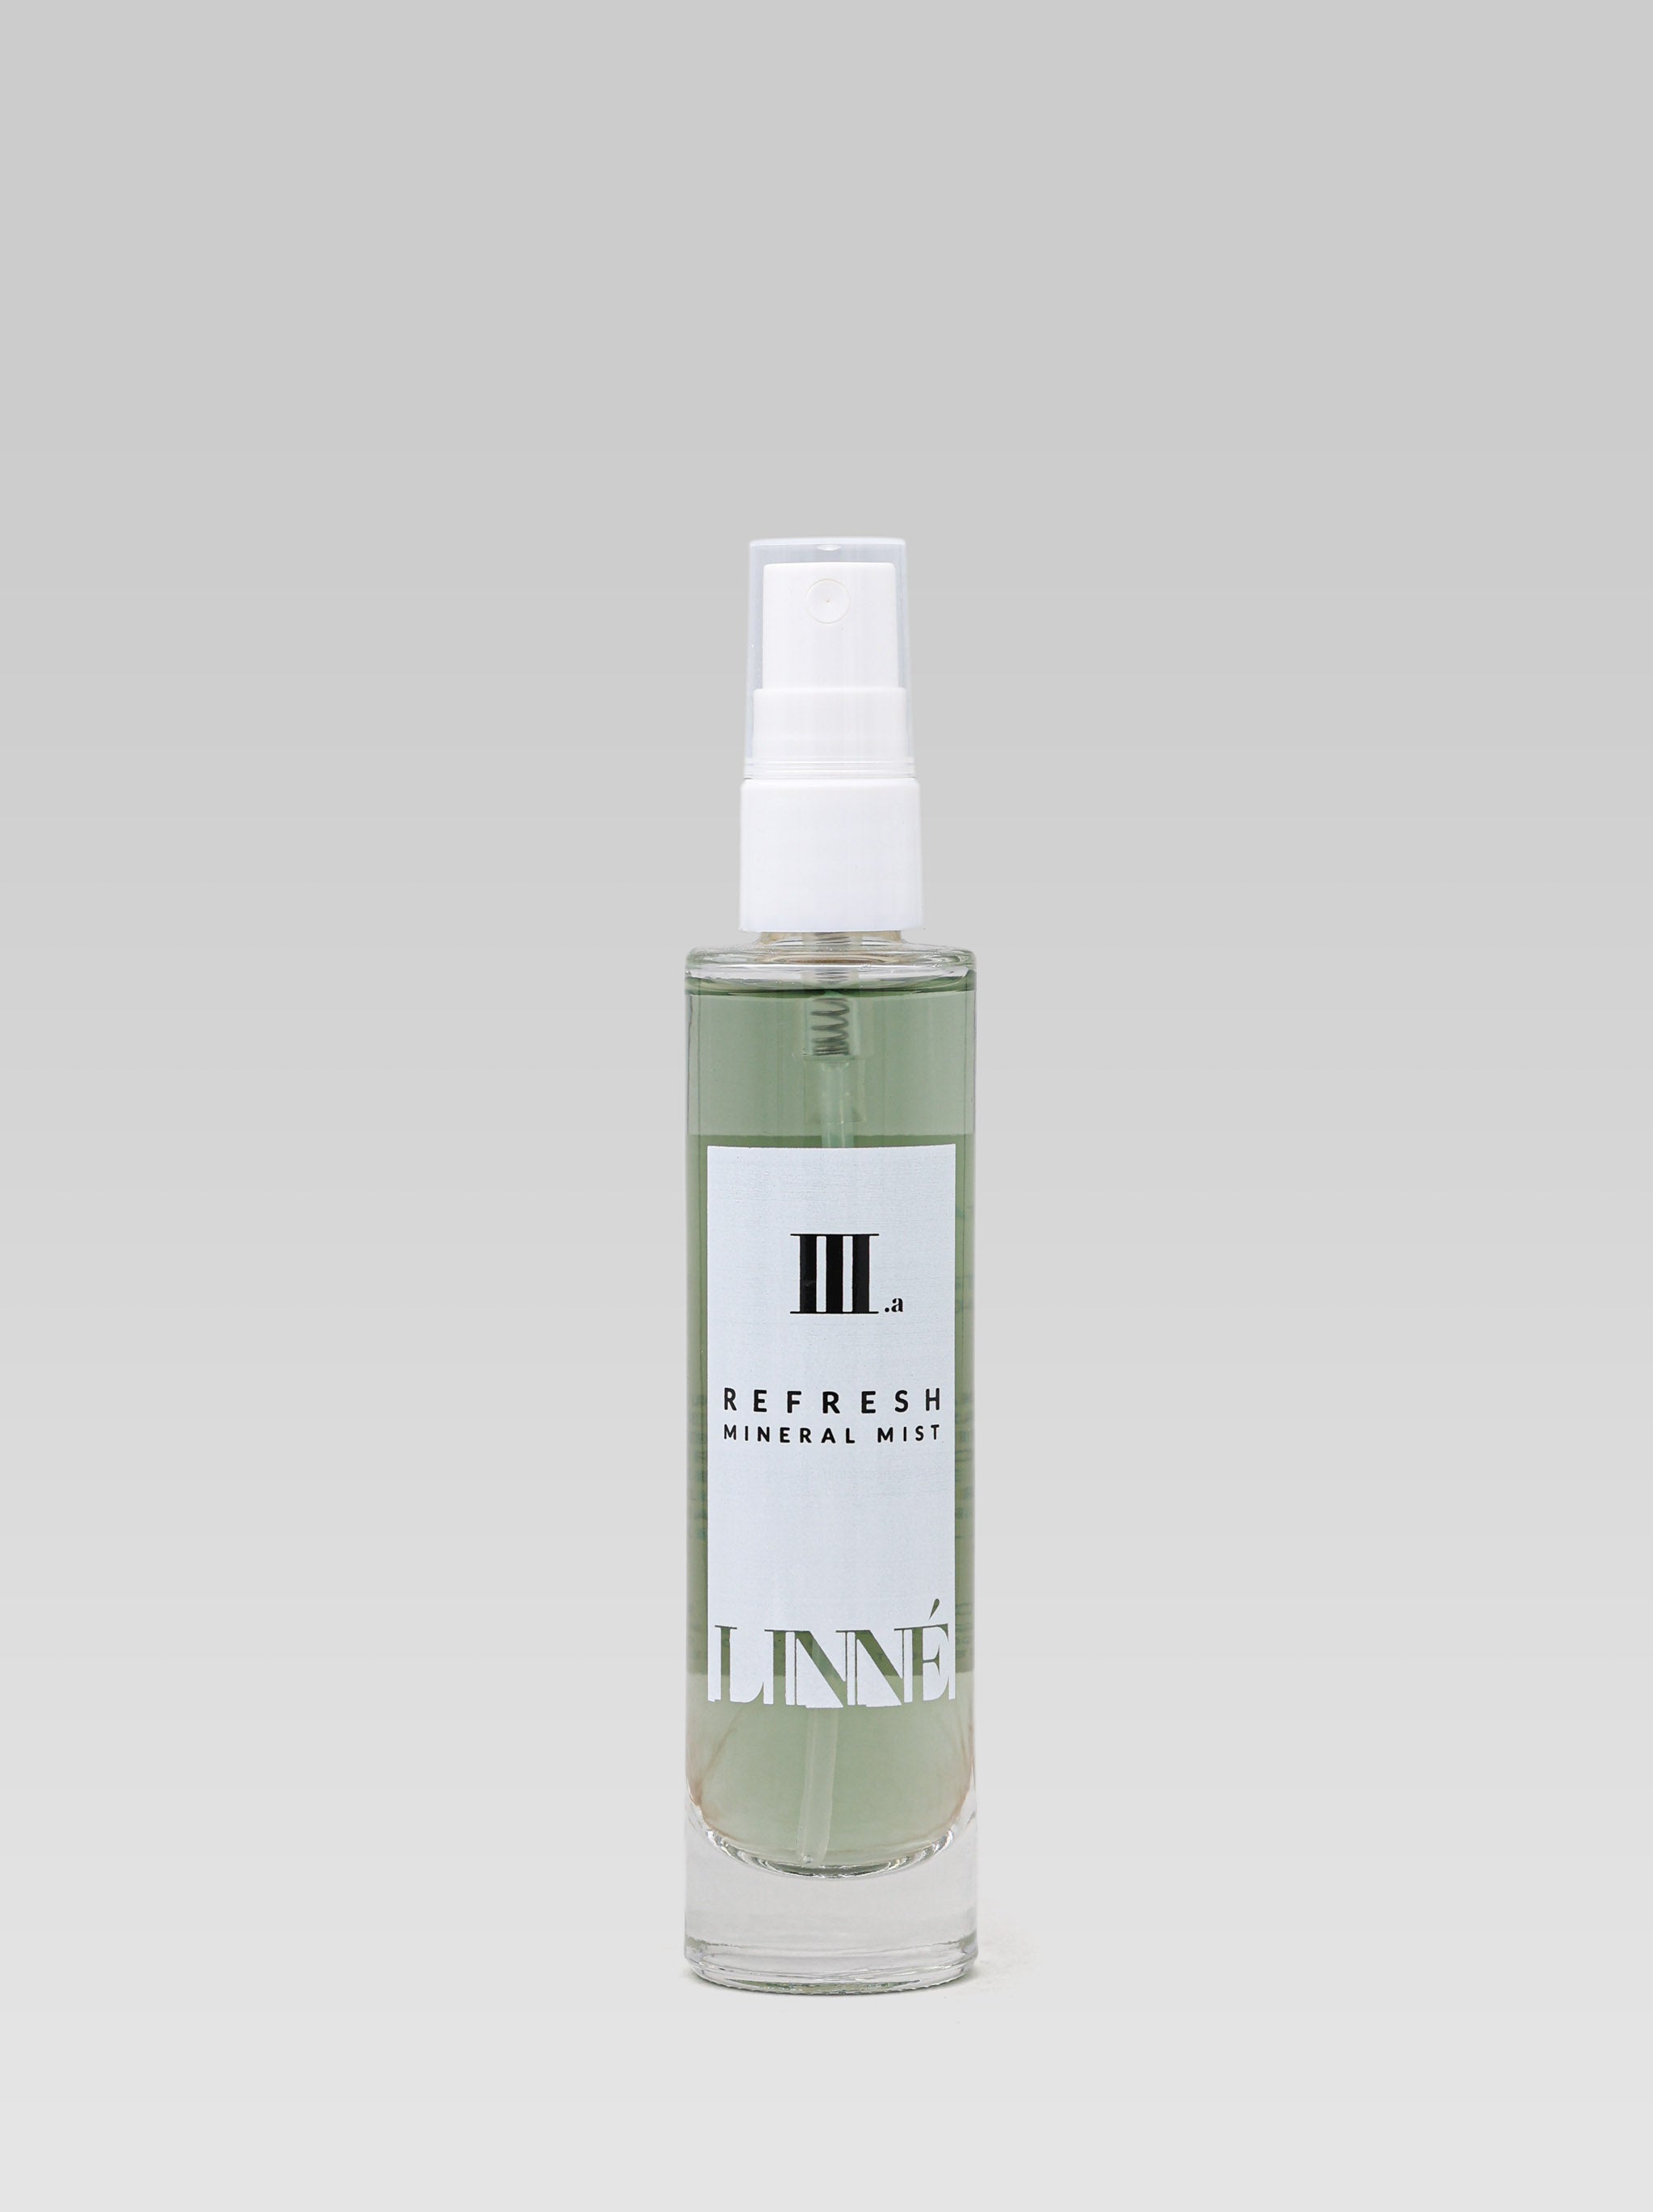 Linne Refresh Mineral Mist product shot